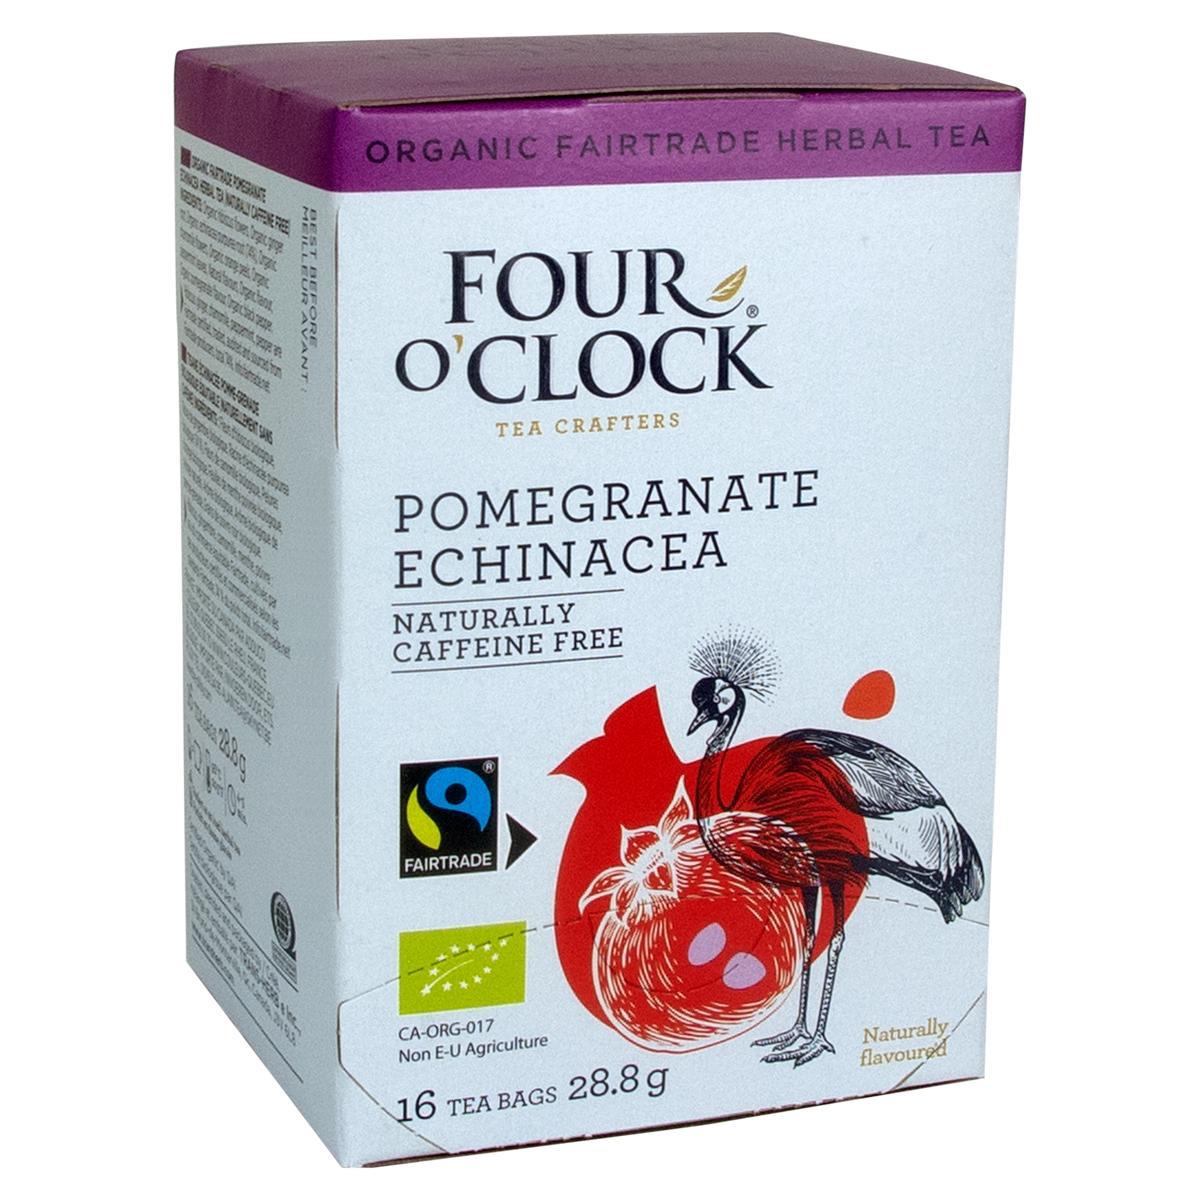 Four O’Clock's Four O'Clock POMEGRANATE ECHINACEA '